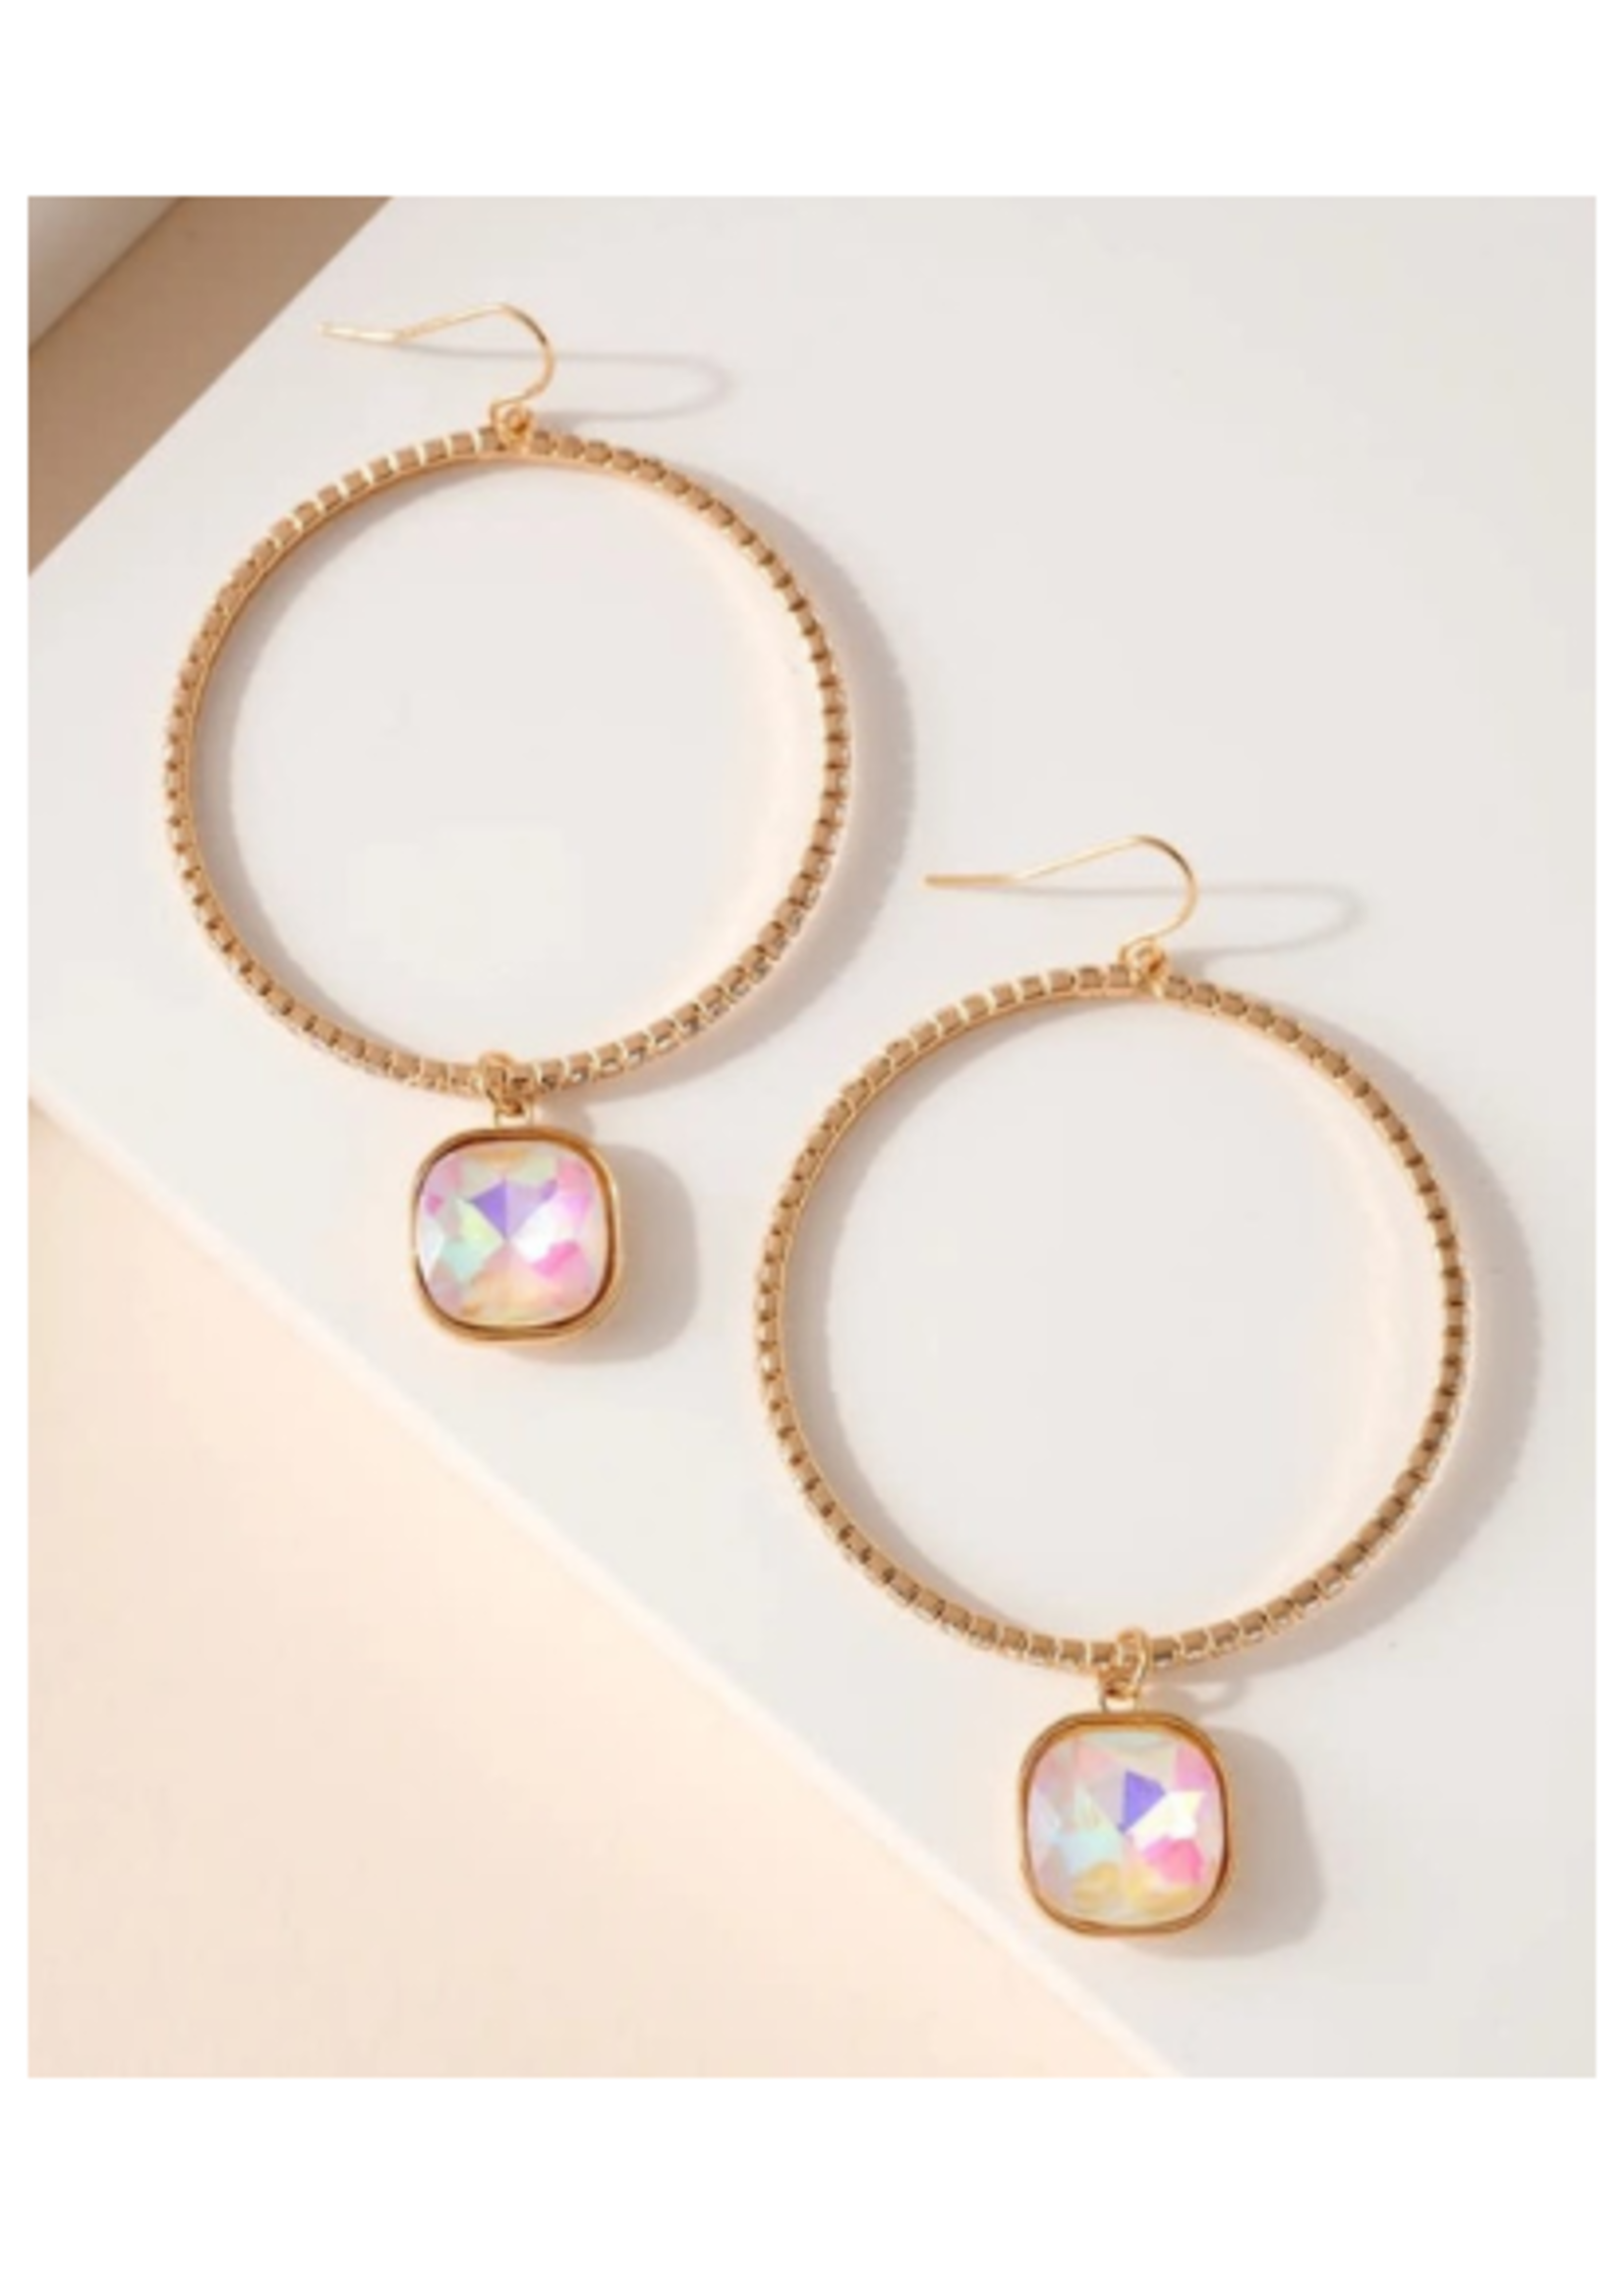 Rhinestone Dangly Earrings - Iridescent Pink